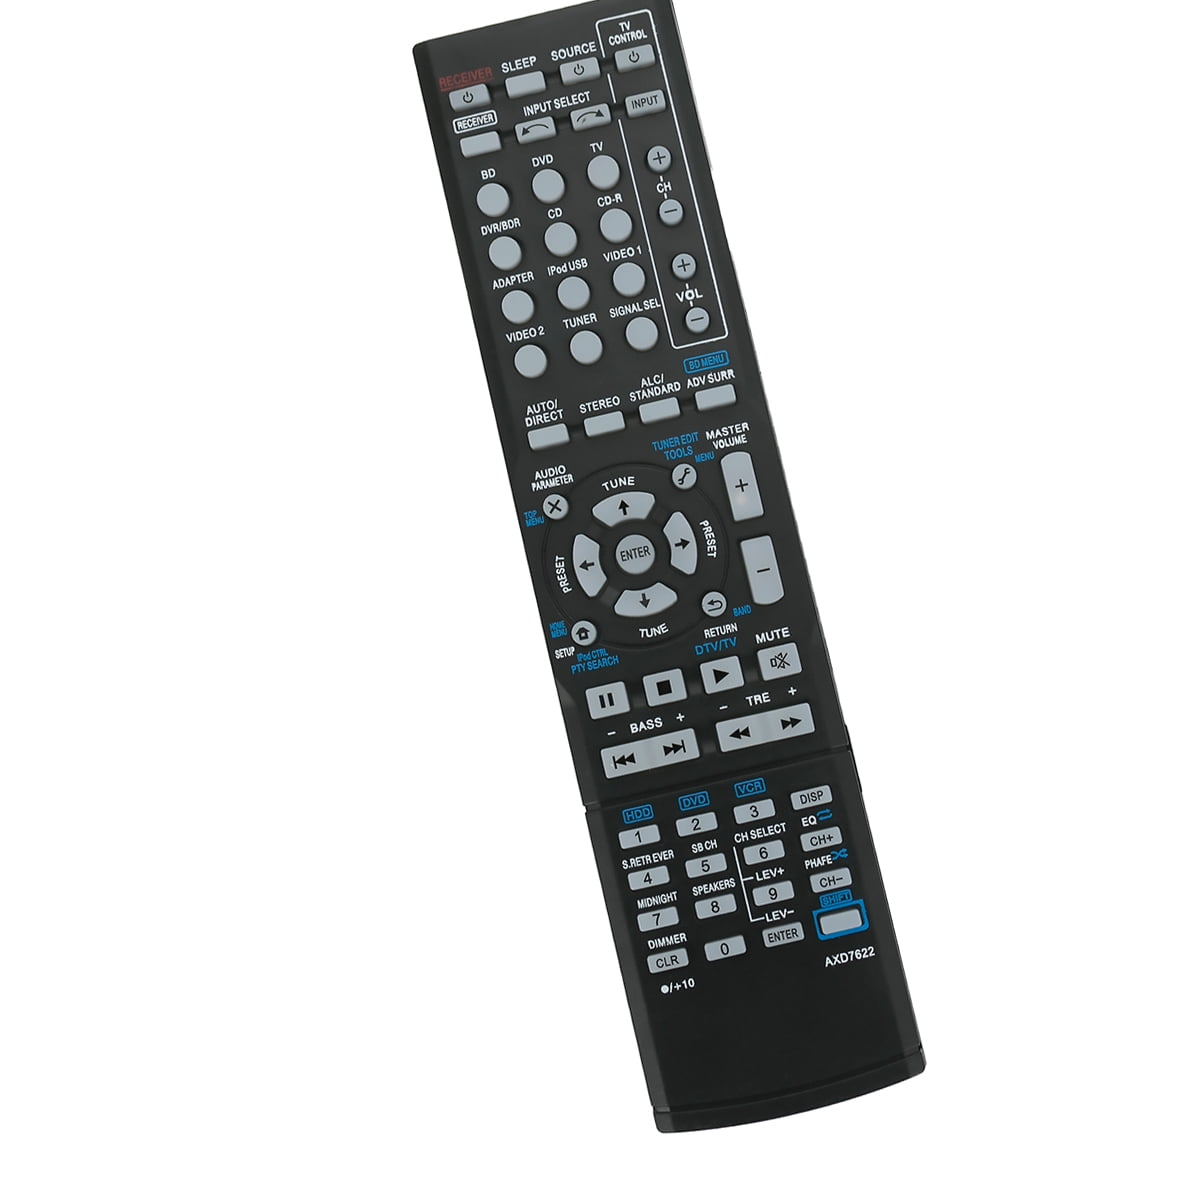 at lege gnier announcer New Replaced Remote Control AXD7622 Fit for Pioneer AV Receiver VSX-821 VSX-821-K  VSX-921 VSX-921-K - Walmart.com